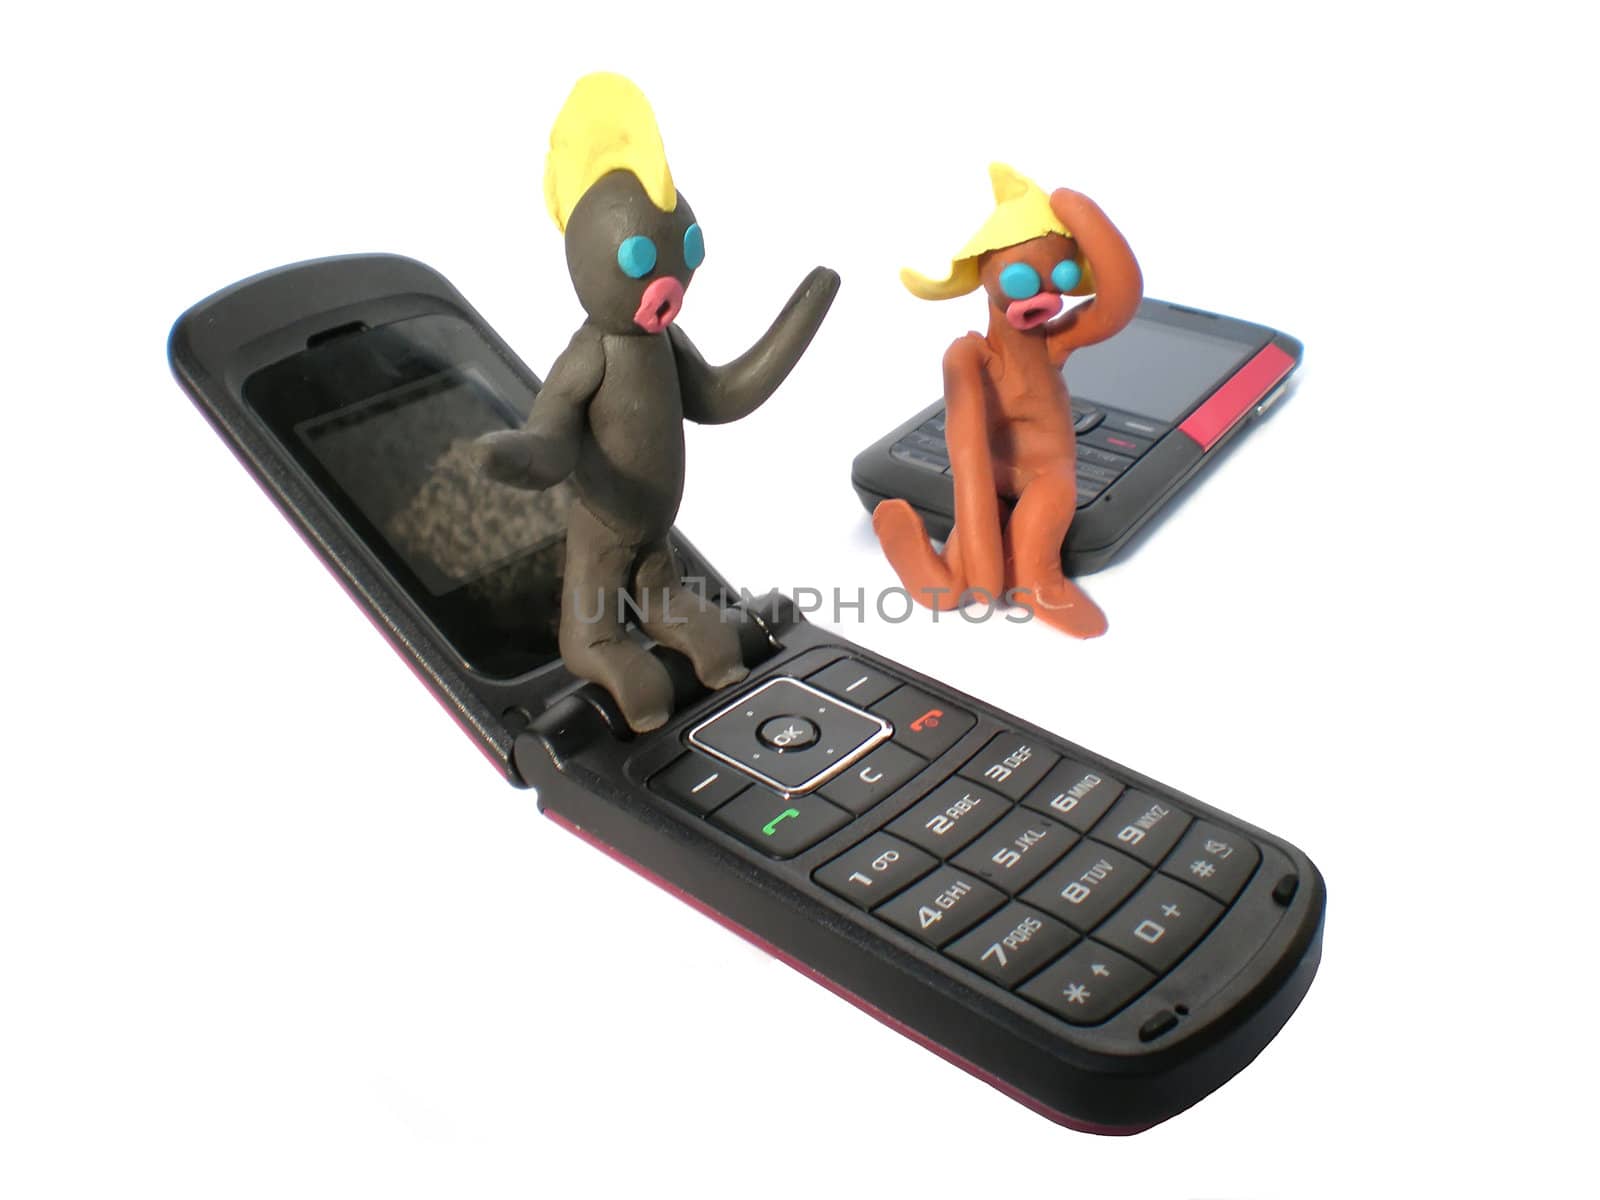 plasticine people figures with phones by Dessie_bg